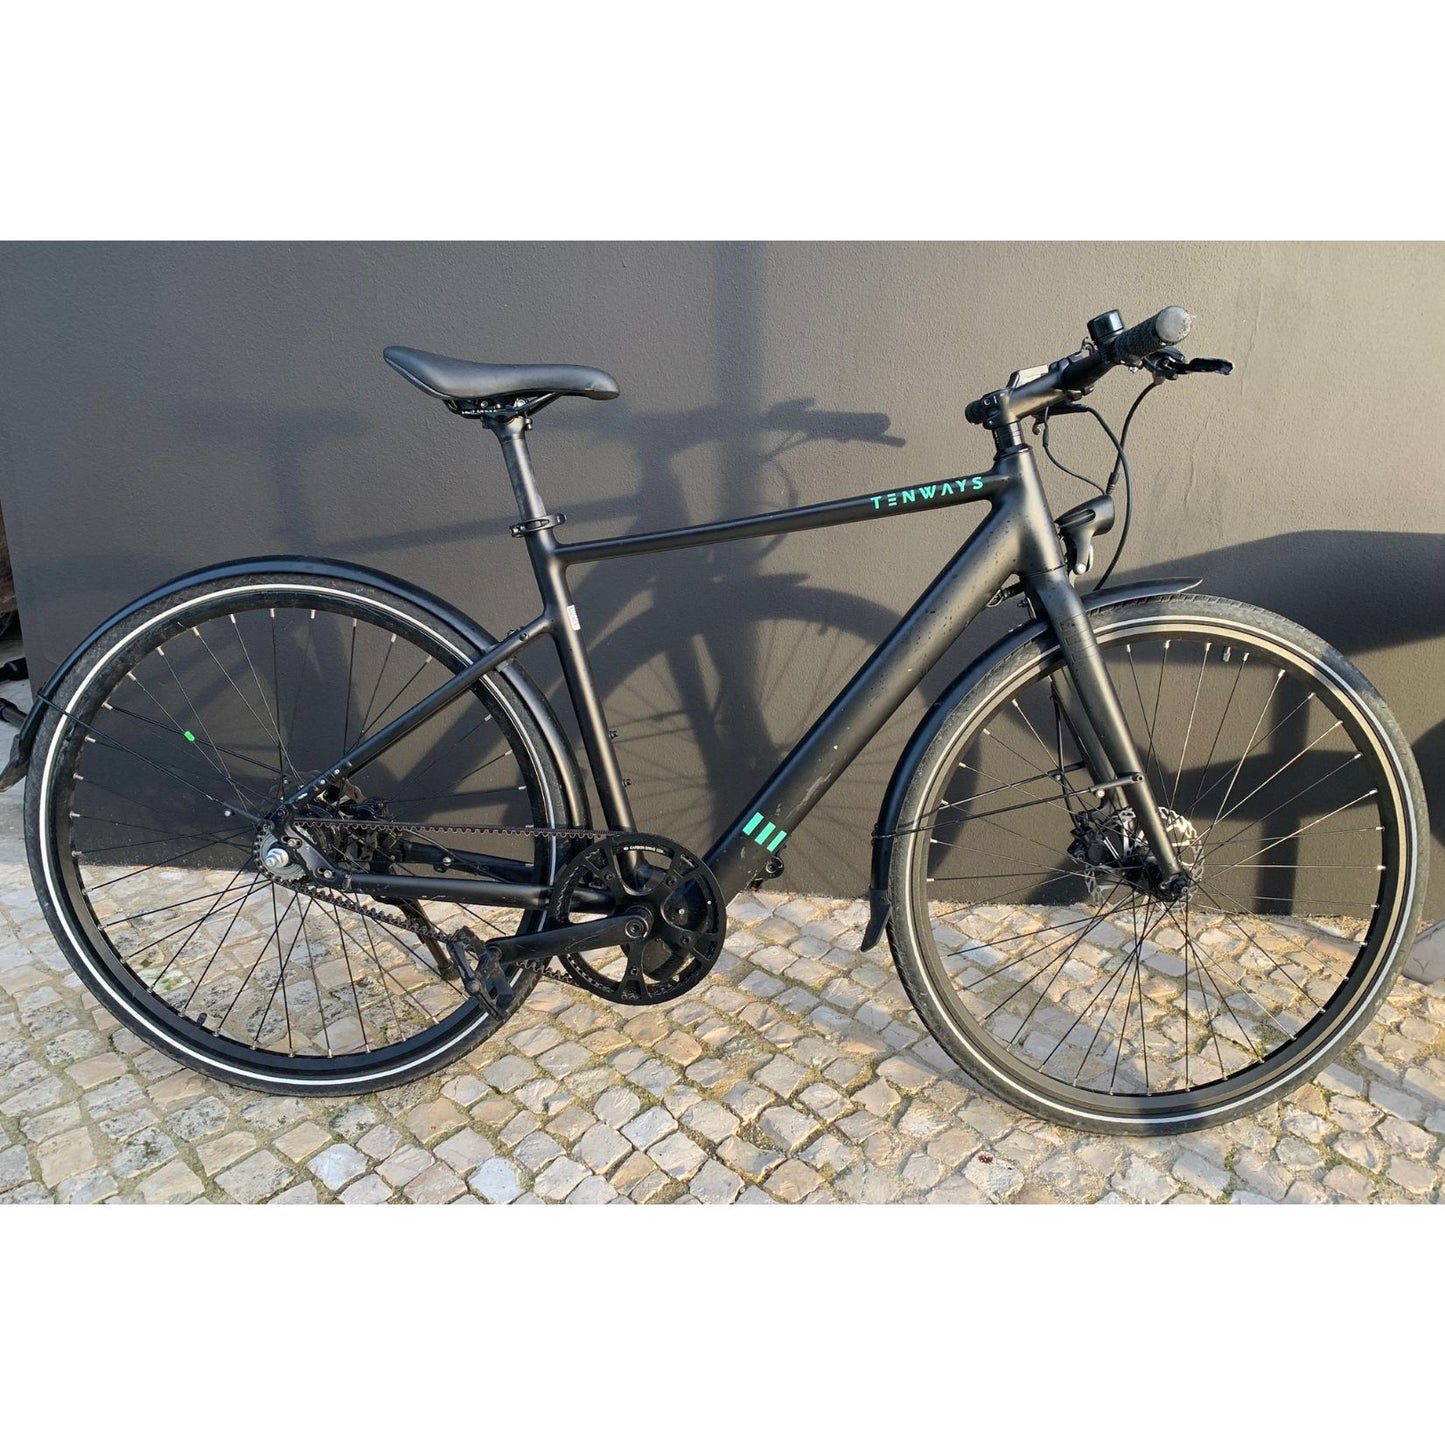 TENWAYS CGO600 Midnight Black | Urban e-Bike | 70 km | Usada de Serviço Unfuel